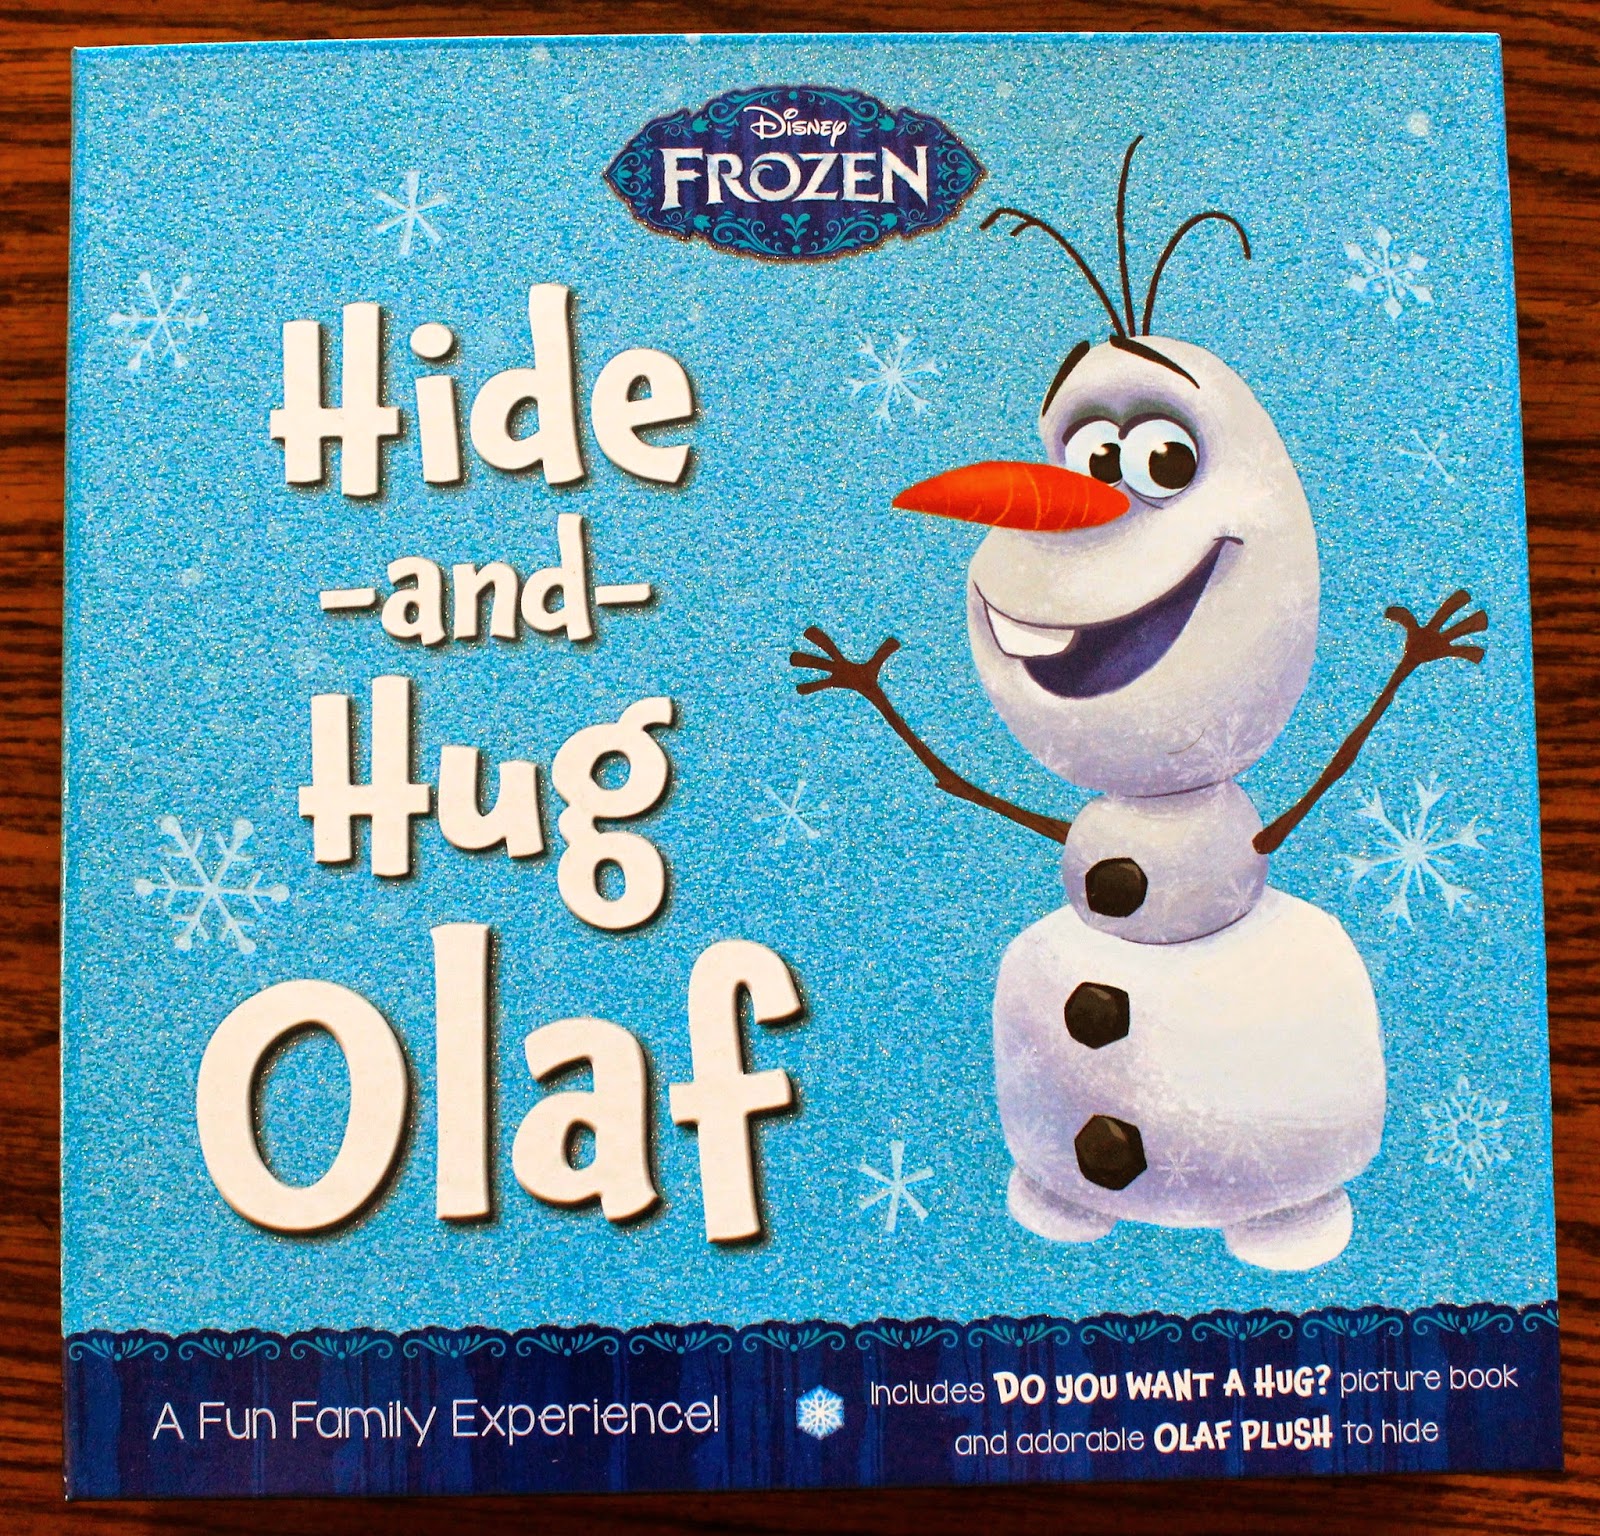 http://www.amazon.com/Disneys-Frozen-Hide-Olaf-Plush/dp/B00P1OXLHO/ref=sr_1_2?ie=UTF8&qid=1417726884&sr=8-2&keywords=hide+and+hug+olaf